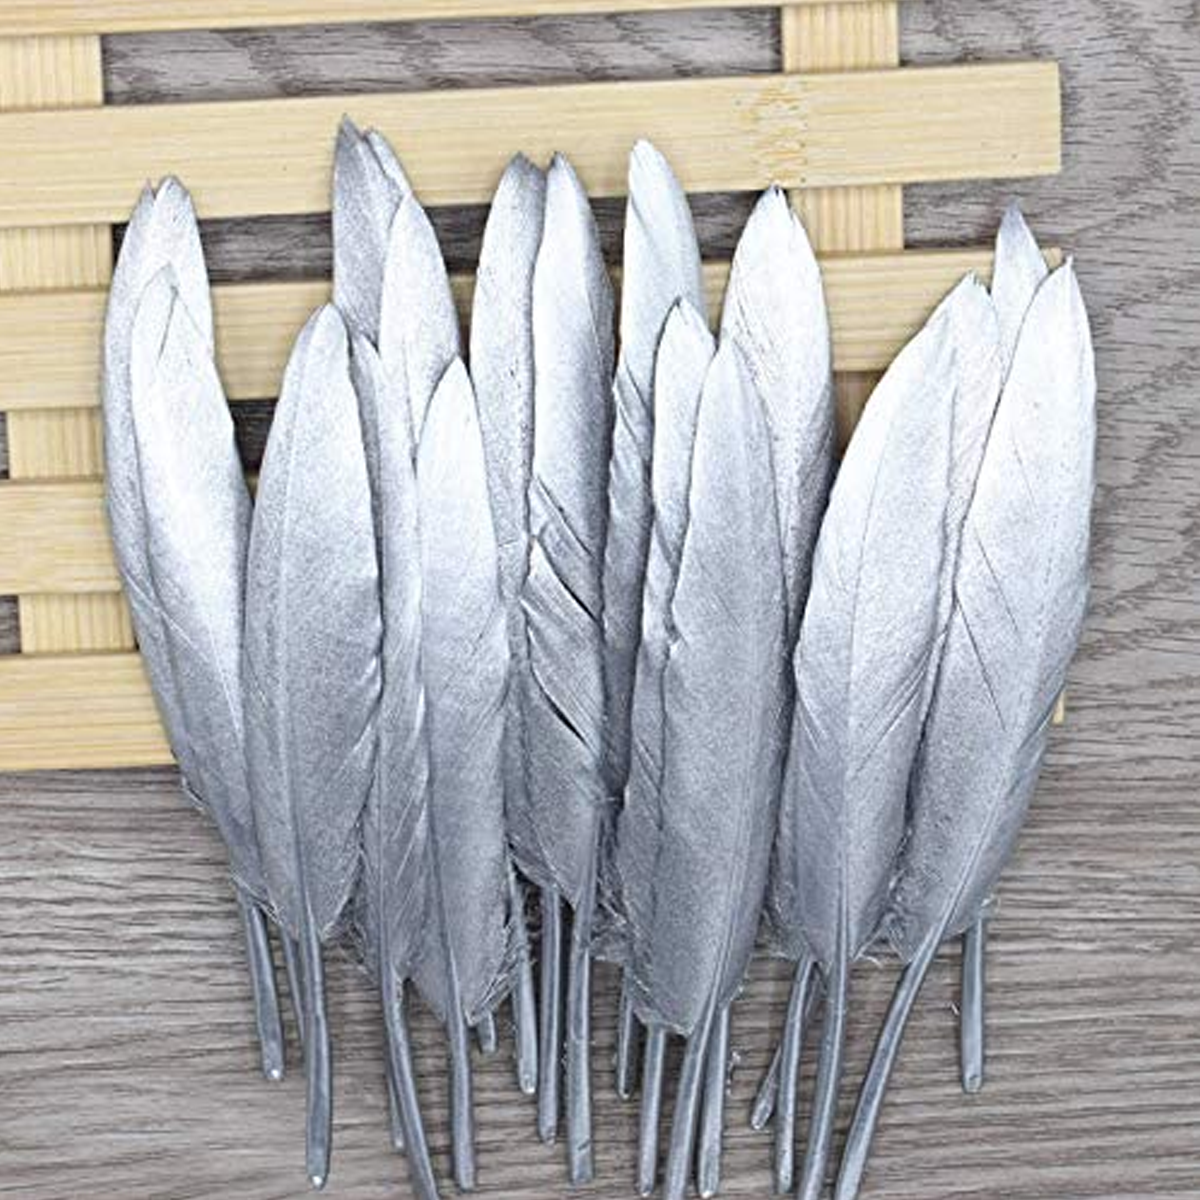 72PCS Silver Feathers Party Favors DIY Room Decor Accessories - 15cm Each